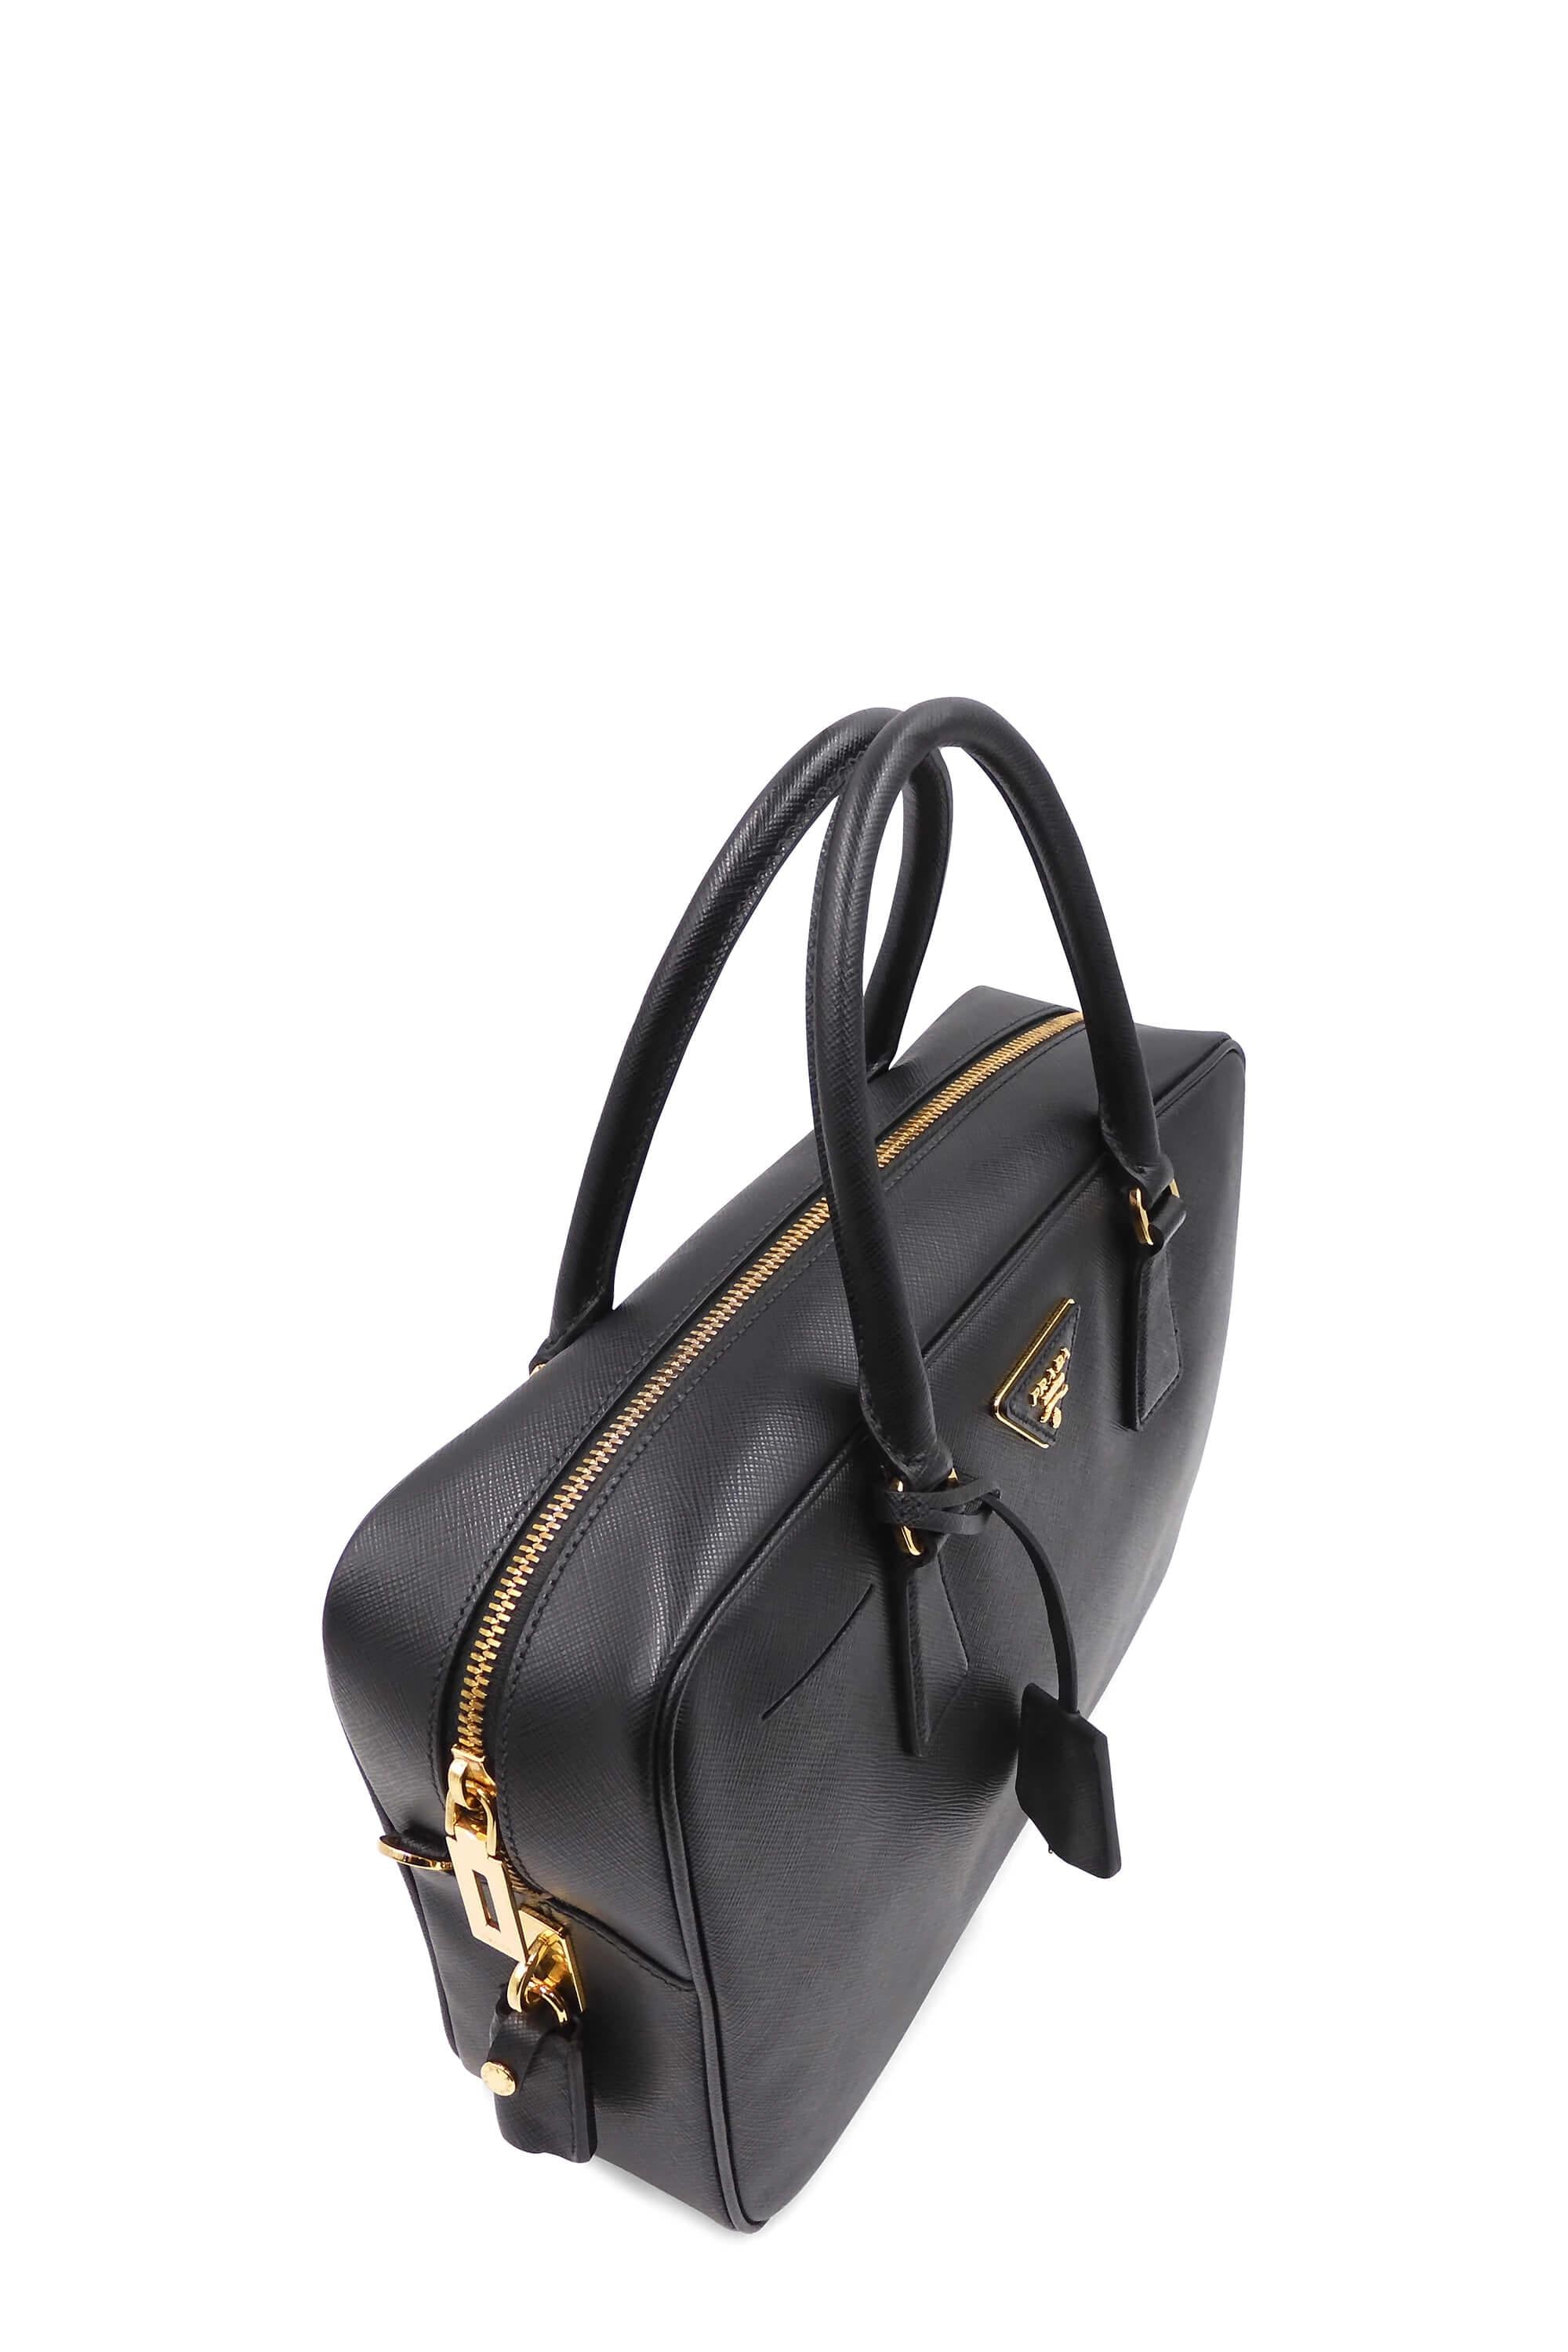 Prada Bauletto Bag Saffiano Leather Mini Black 4807012